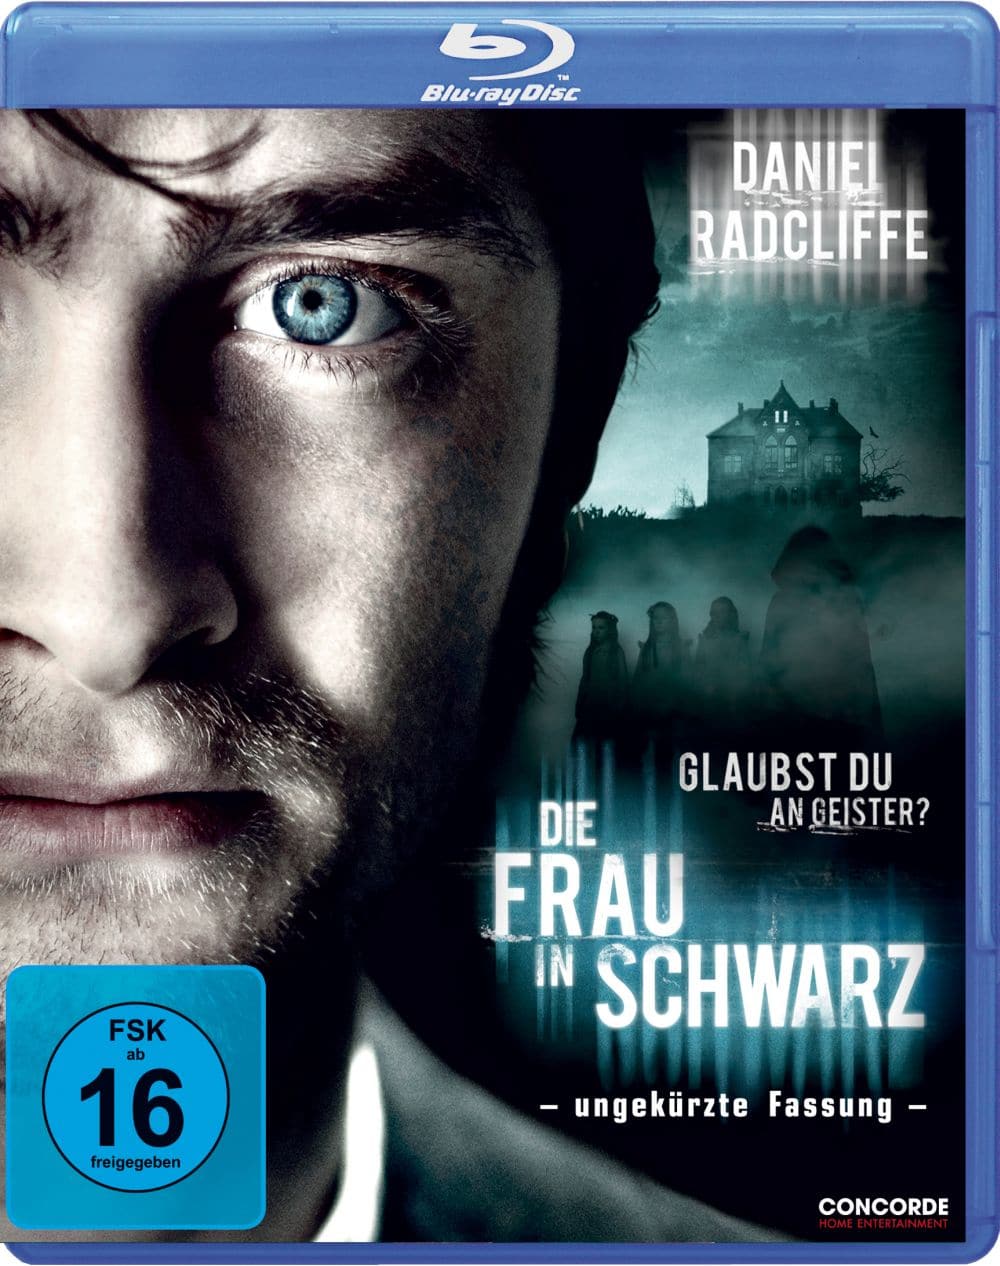 die-frau-in-schwarz-blu-ray-cover-fsk-16-scary-movies-de